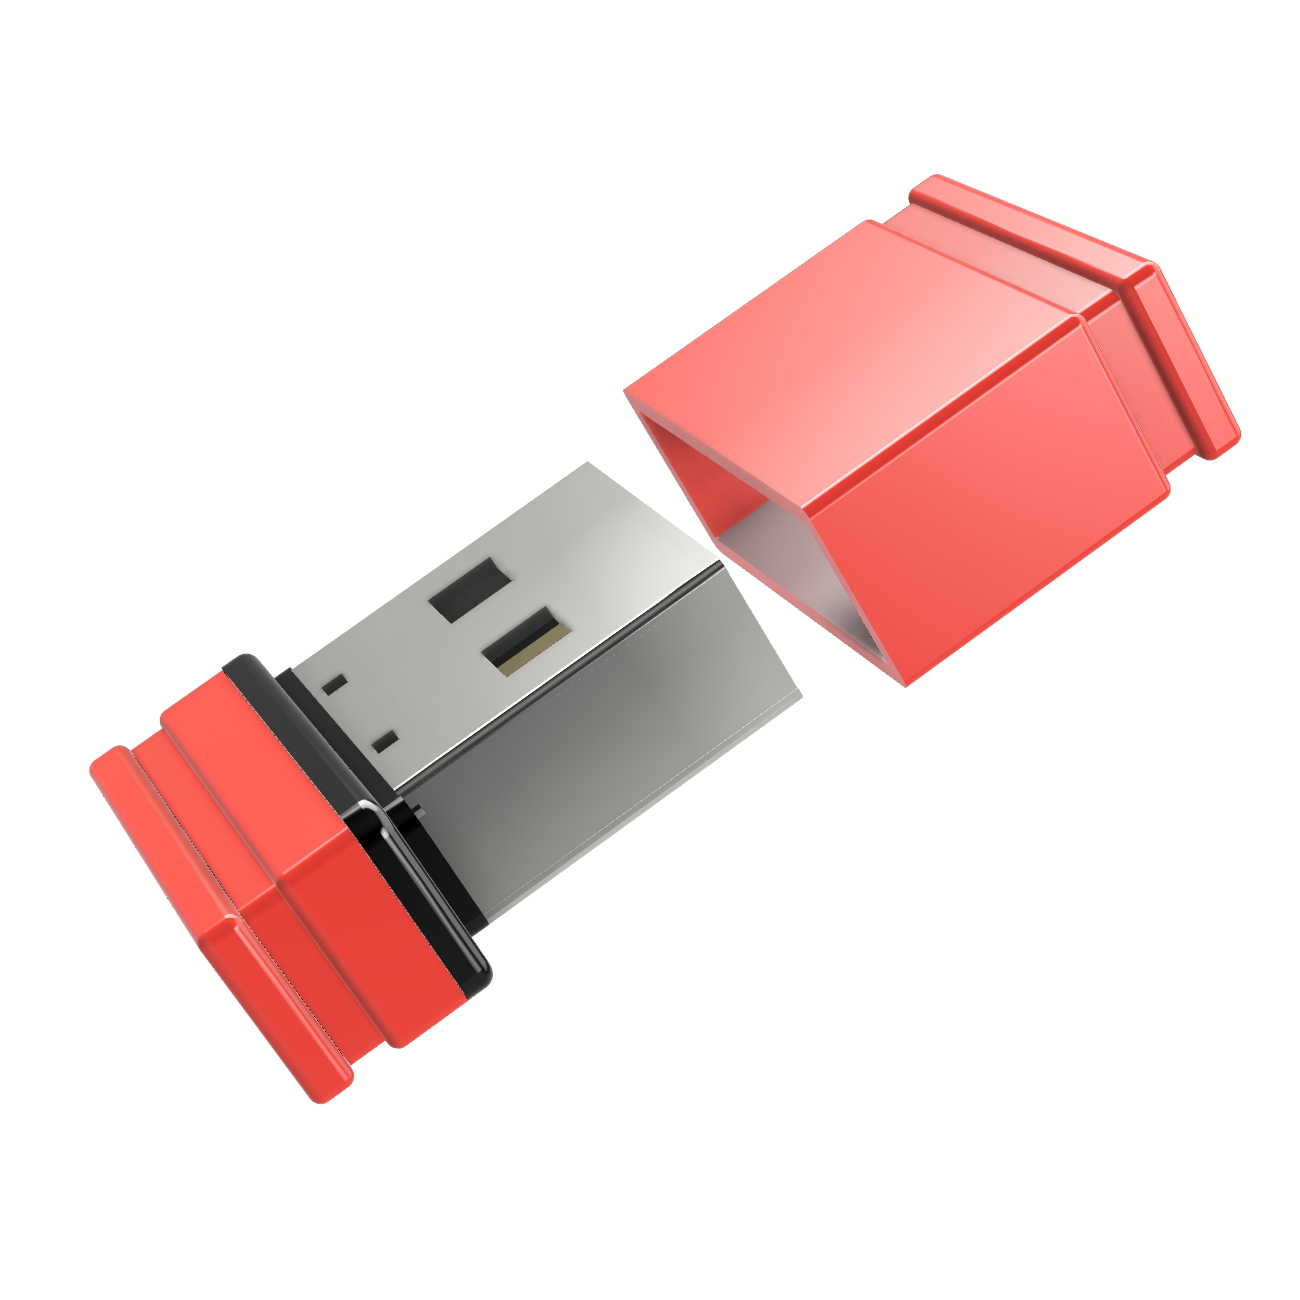 P1 Mini USB GERMANY GB) (Rot/Schwarz, ®ULTRA USB-Stick 2